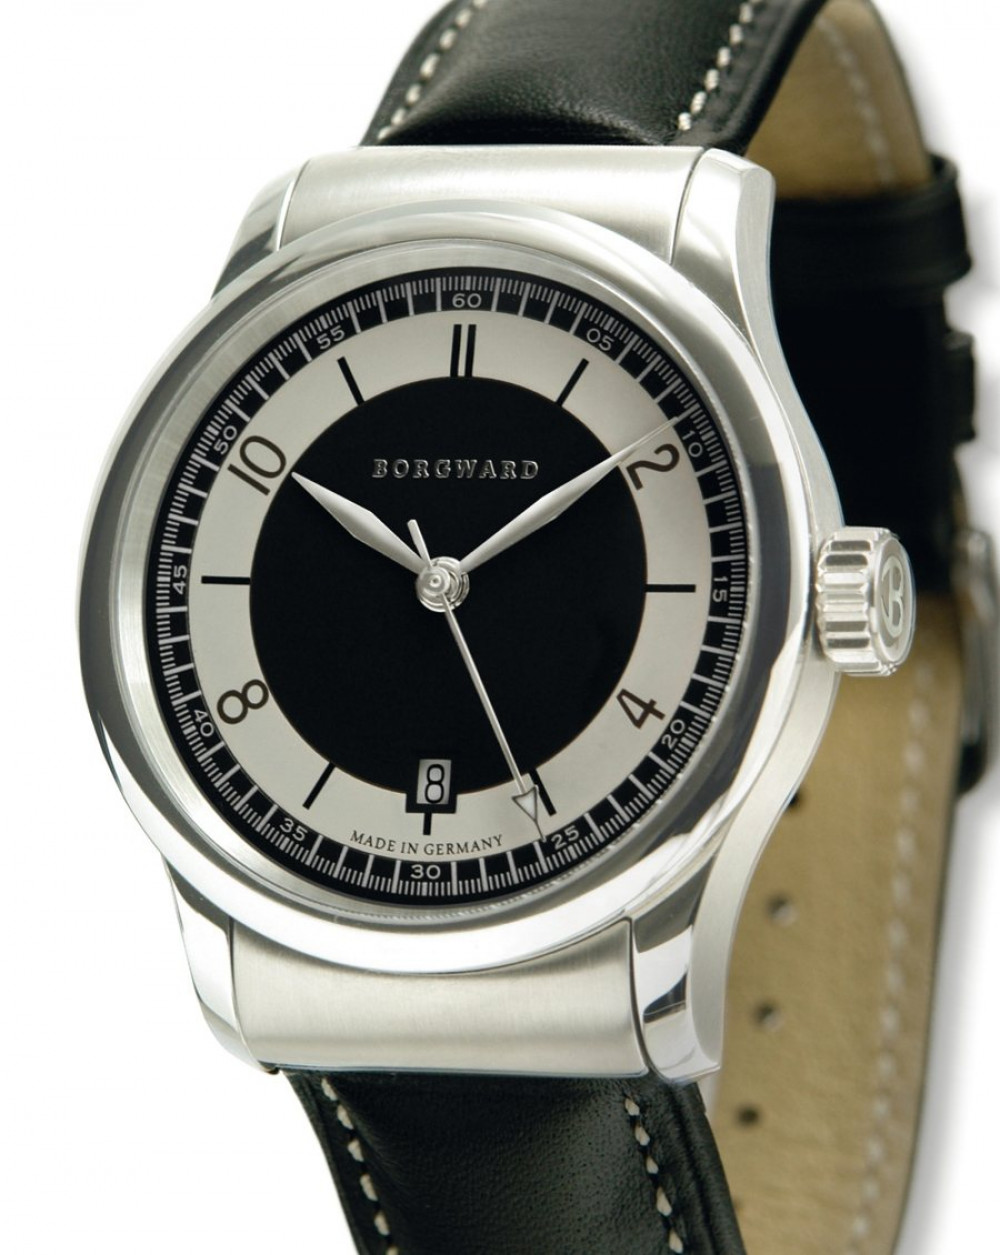 Zegarek firmy Borgward, model B511